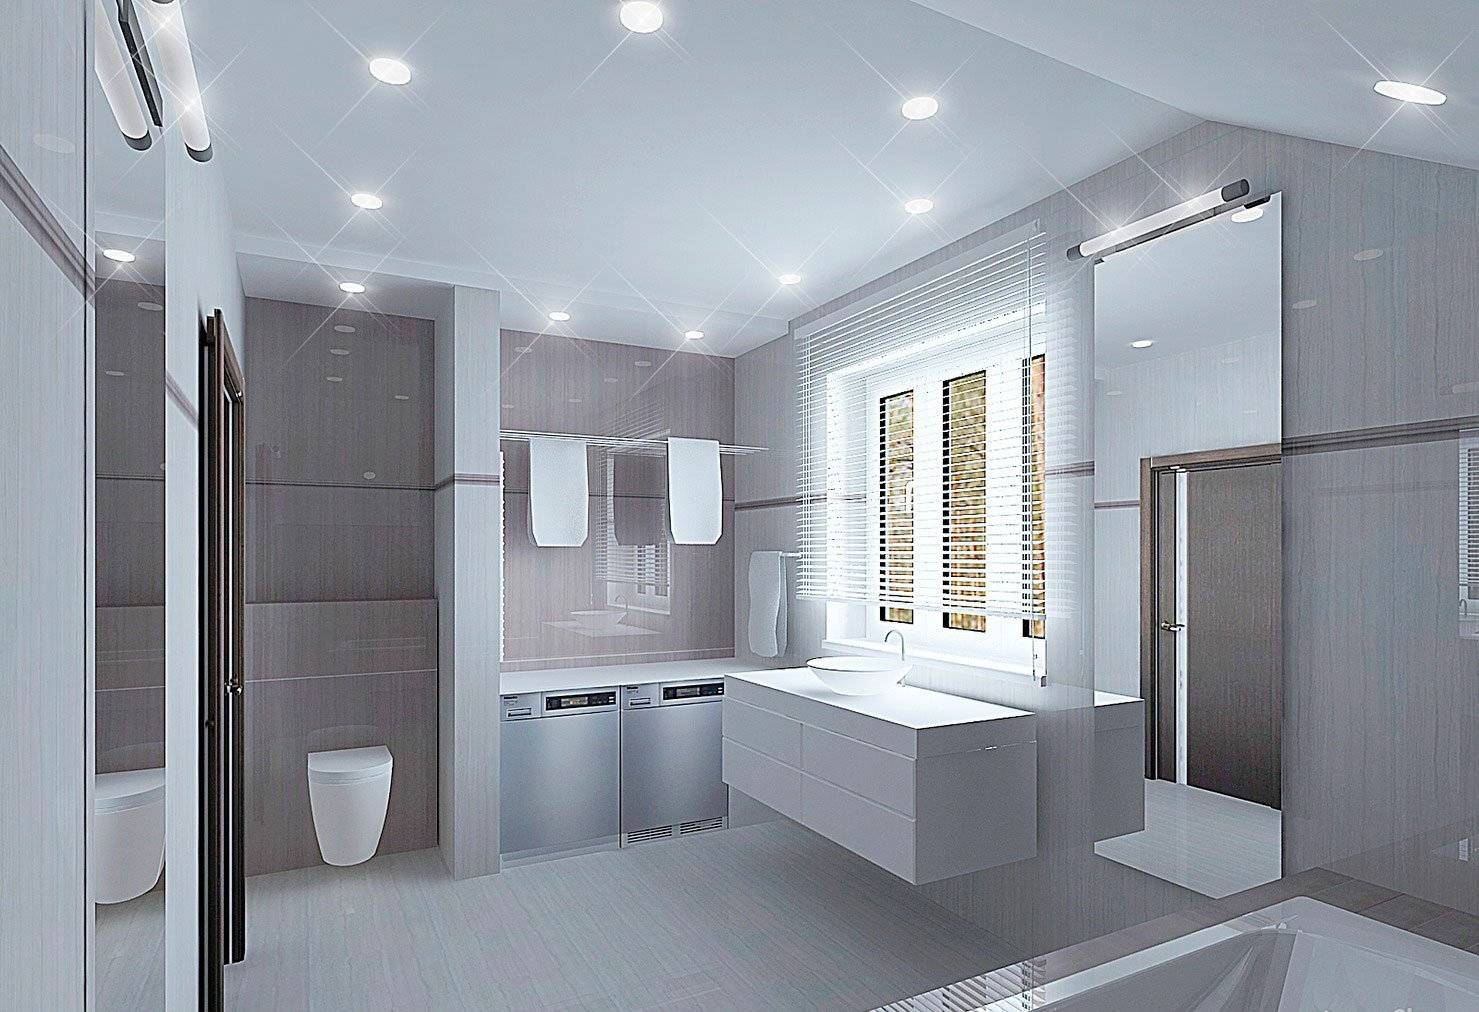 г образная ванная комната дизайн проект